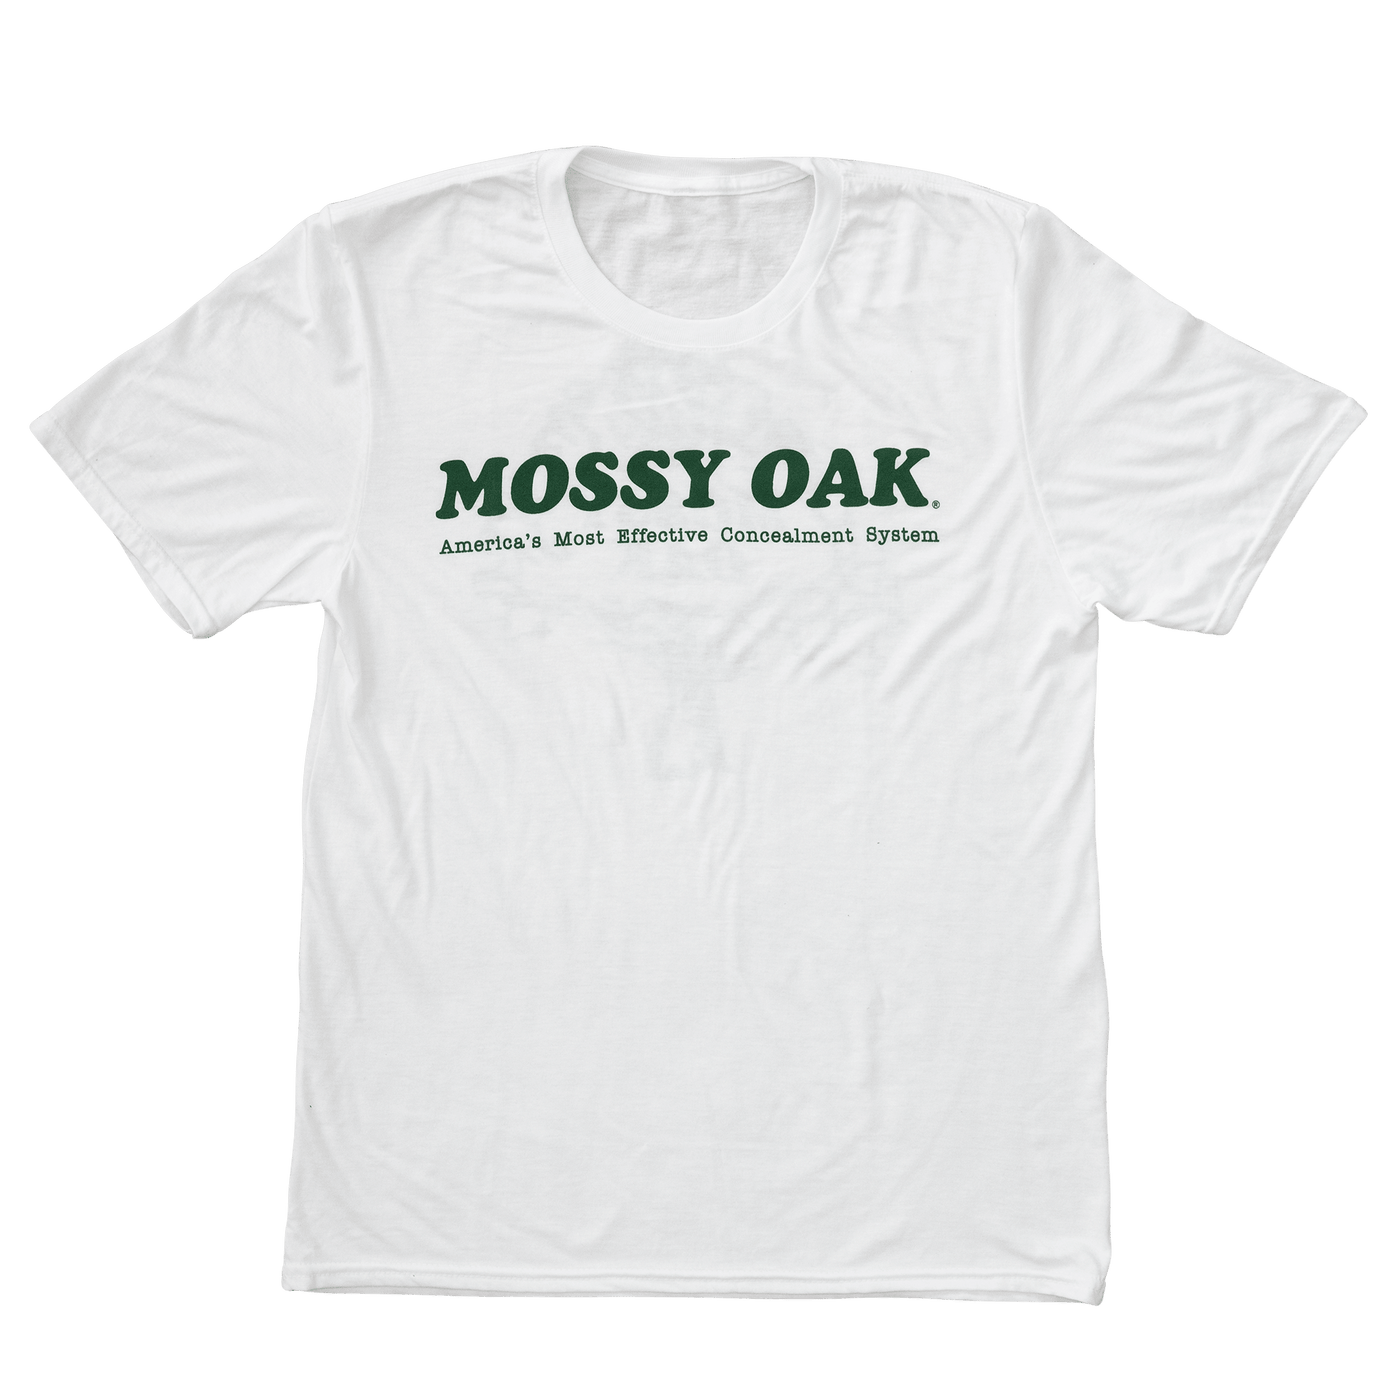 Mossy Oak Vintage Tagline Tee